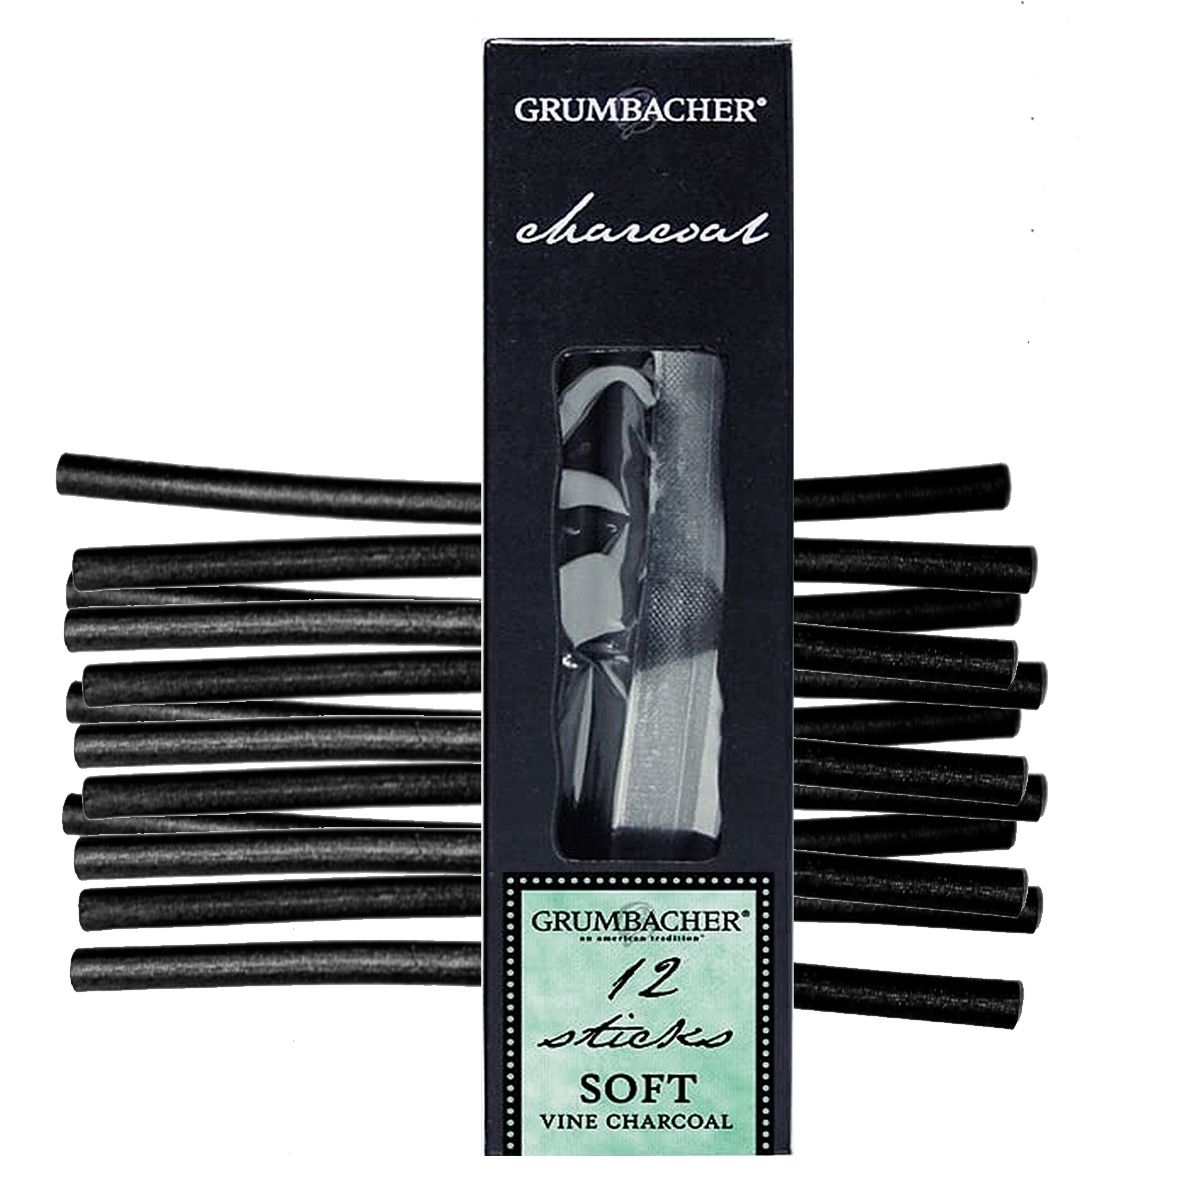 Grumbacher Soft Vine Charcoal, 12 Pack